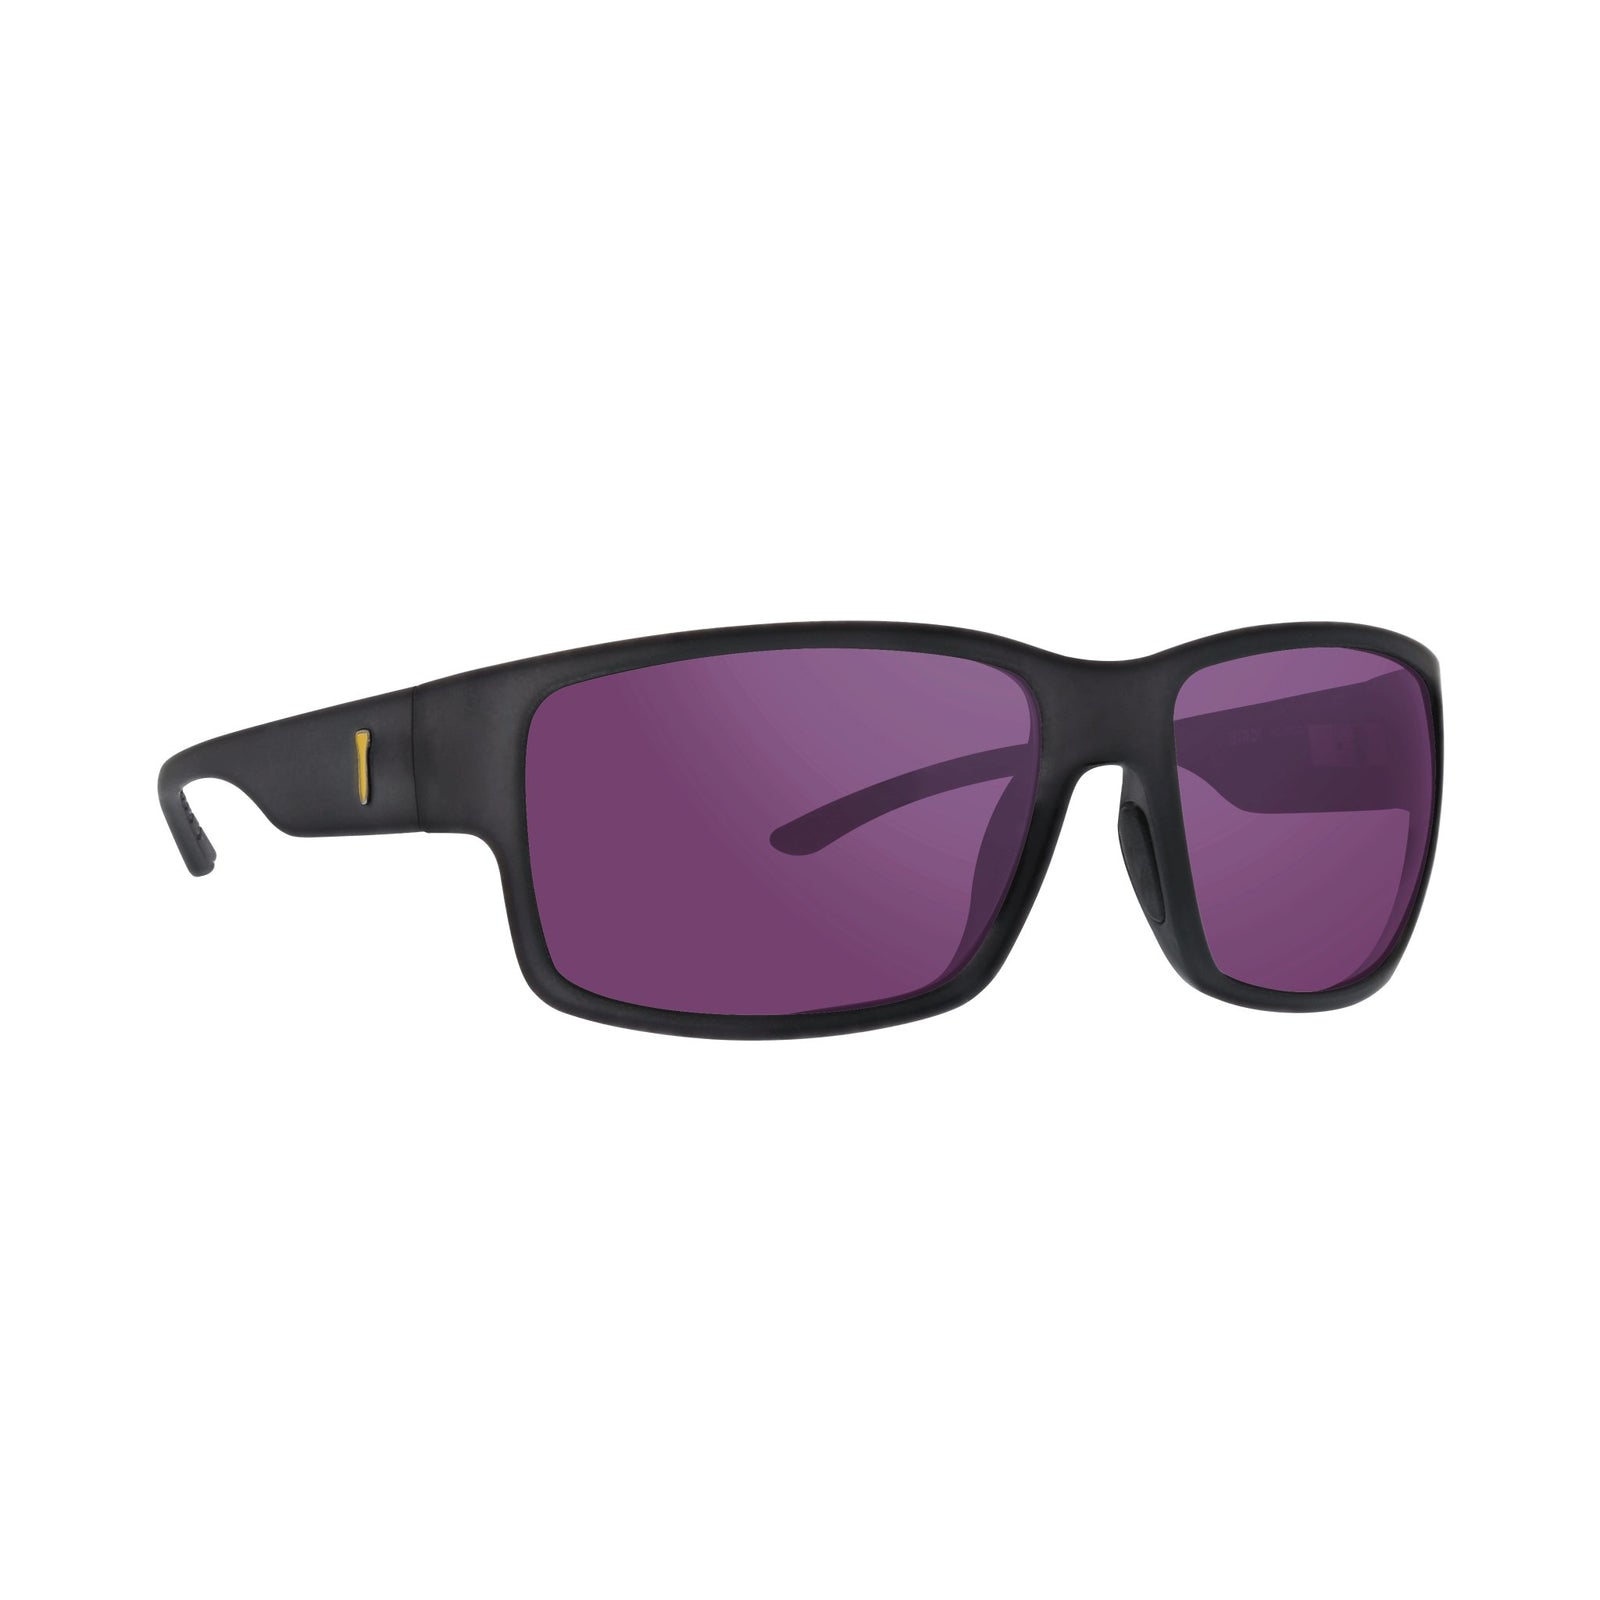 Shop Golf Sunglasses  Maui Jim® Polarized Sunglasses for Golf